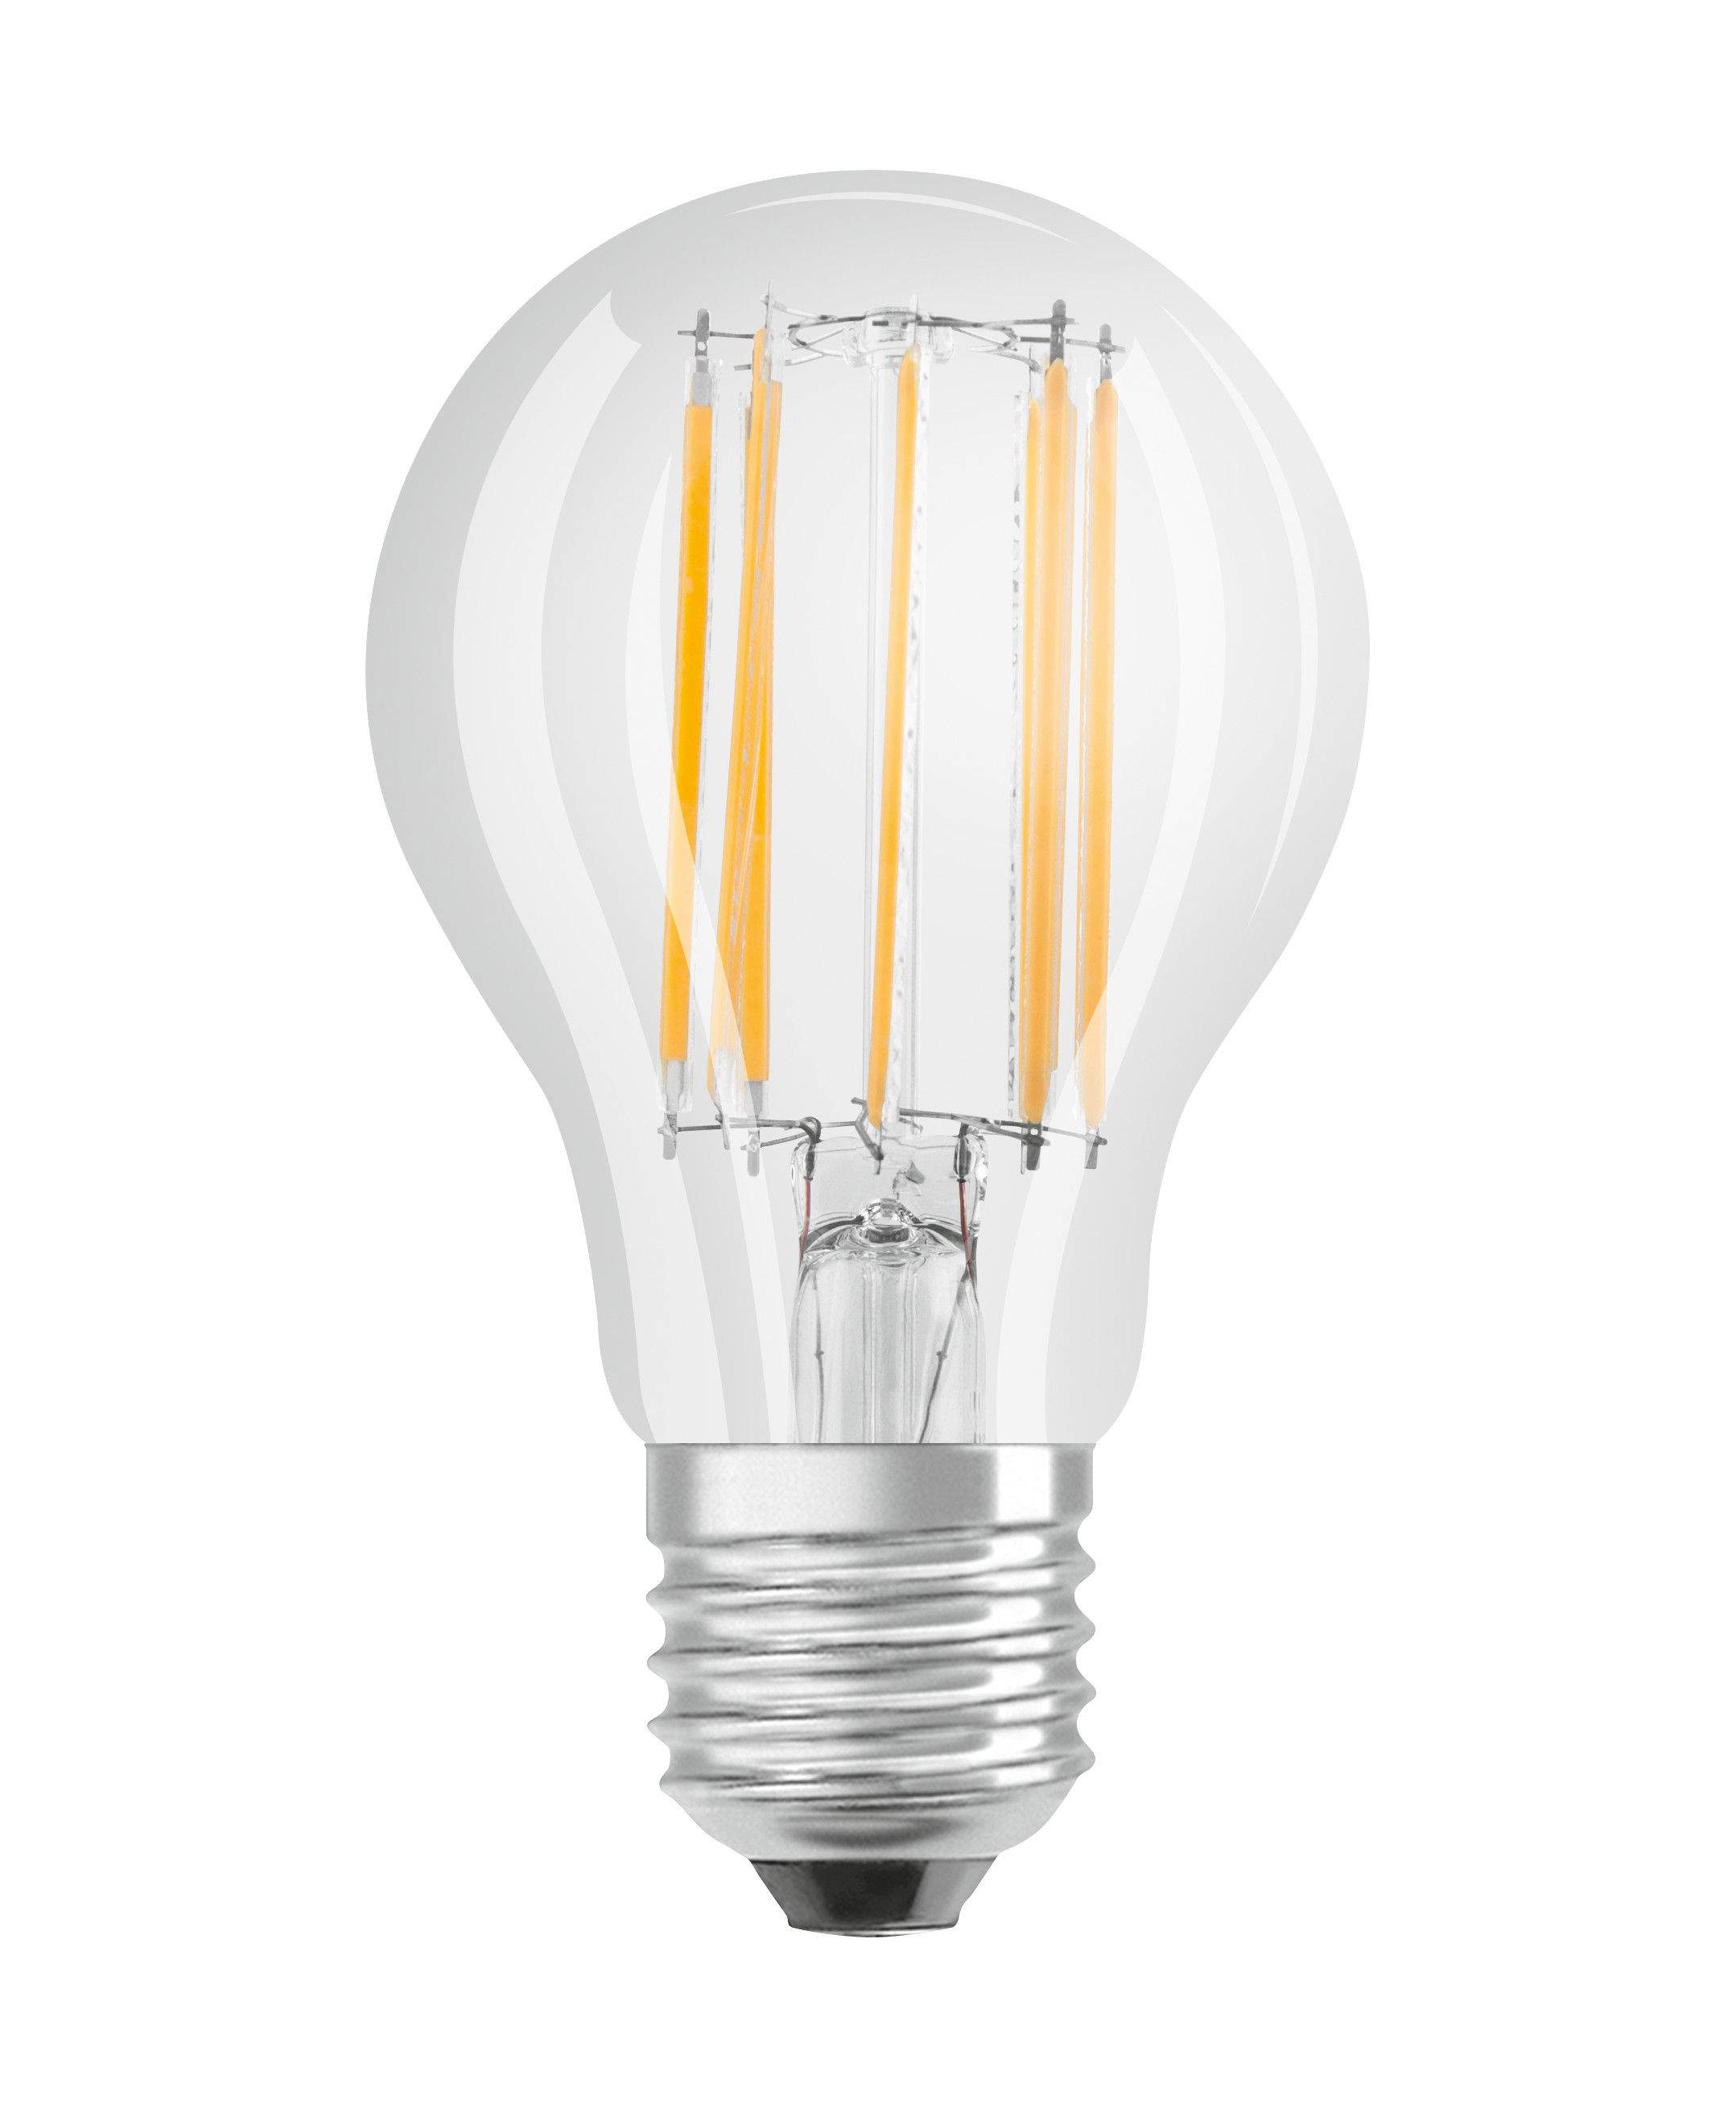 E27 standard clear glass LED bulb, 7.5W, warm white.